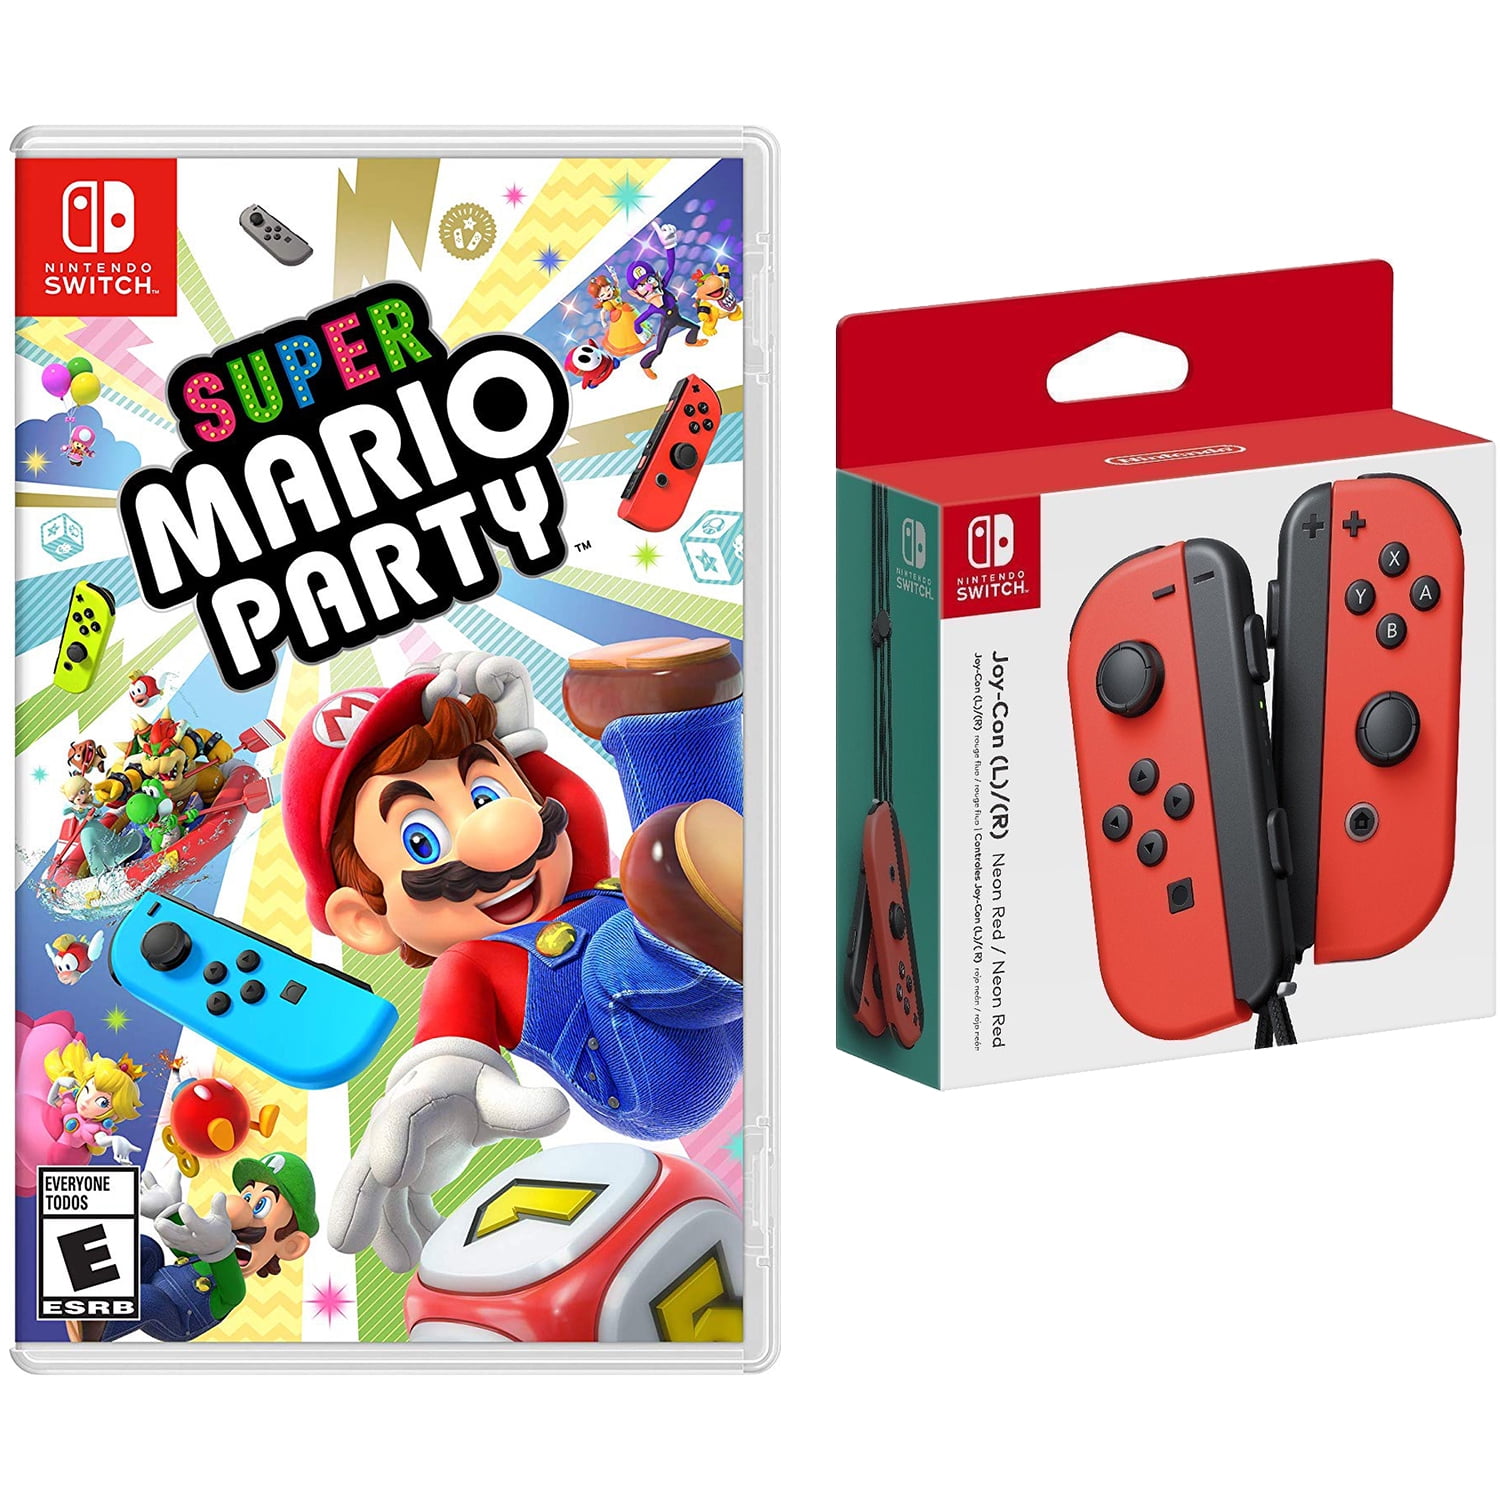 hoste Våbenstilstand Formand Nintendo Switch Super Mario Party and Neon Red Joy Con Controllers Bundle -  Walmart.com